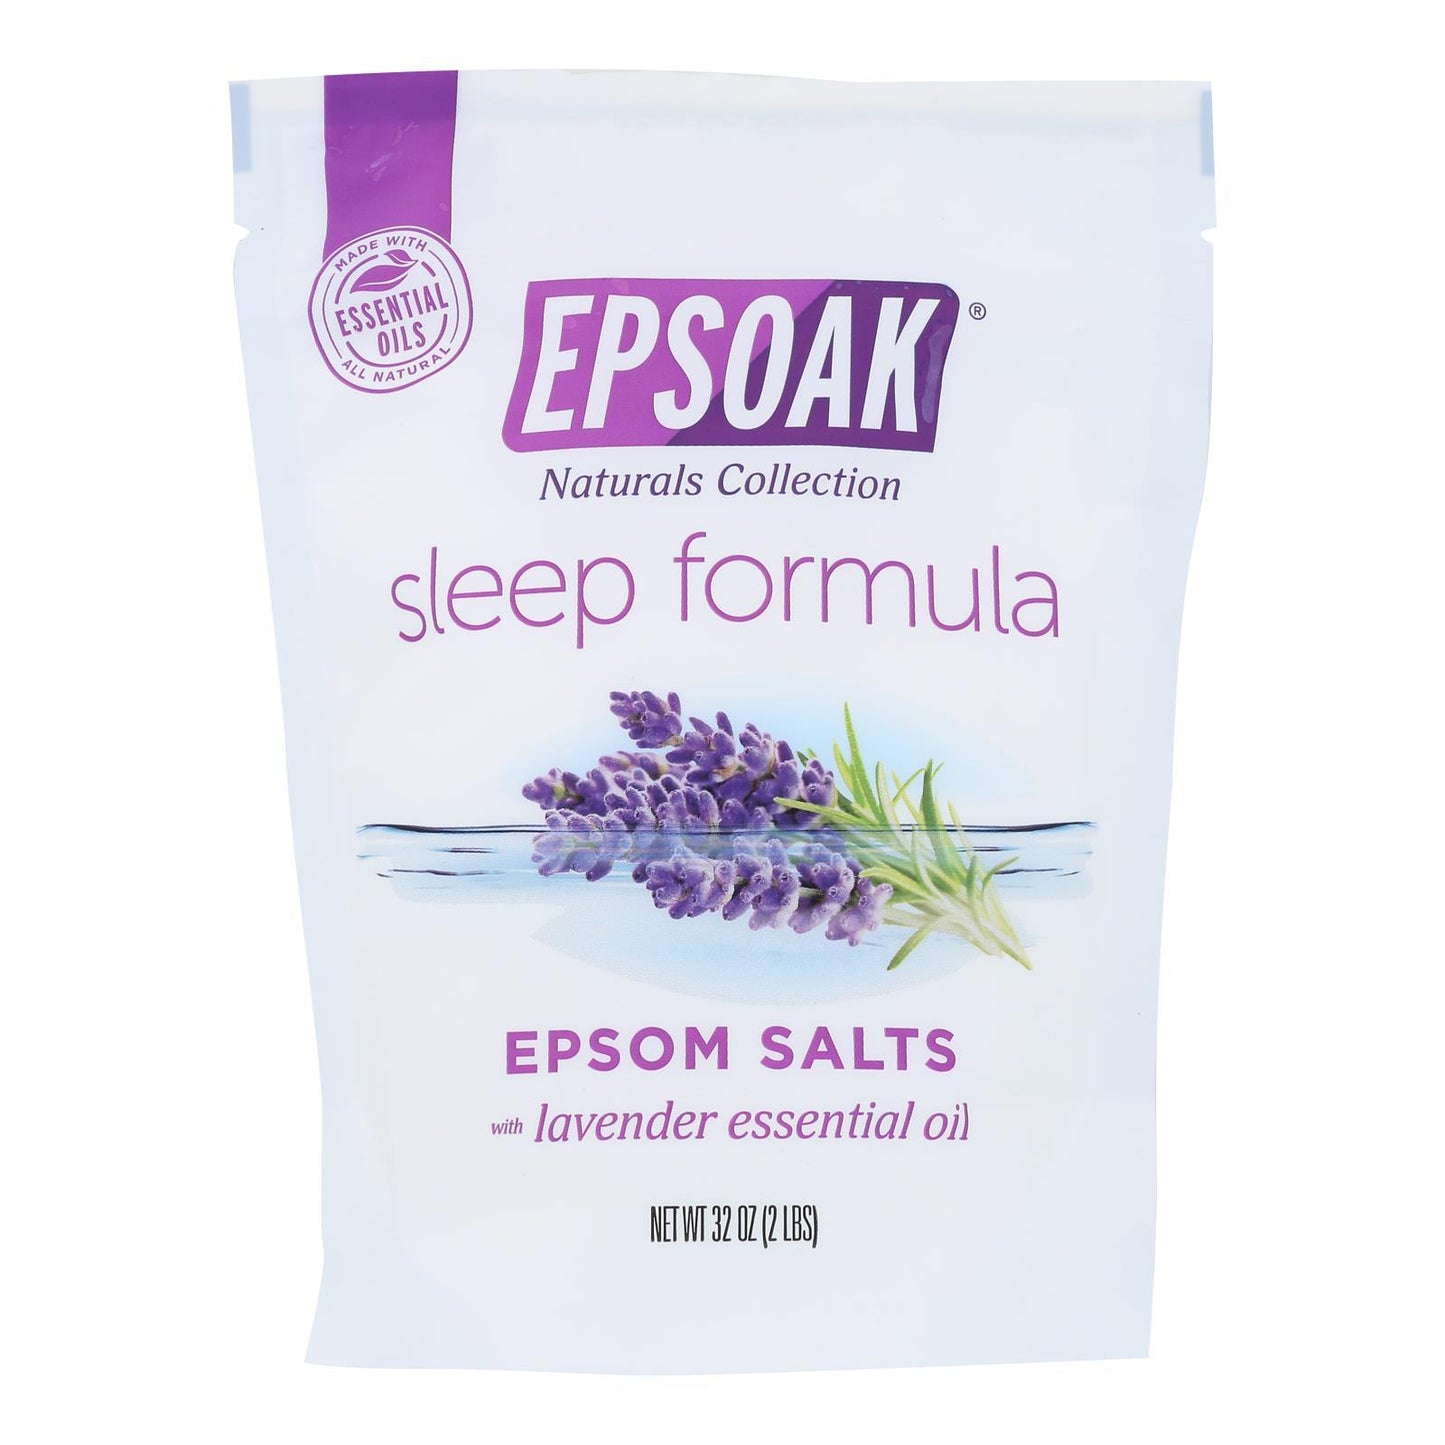 Epsoak - Epsm Salt Leo Slp Formla - Case Of 6 - 2 Lb